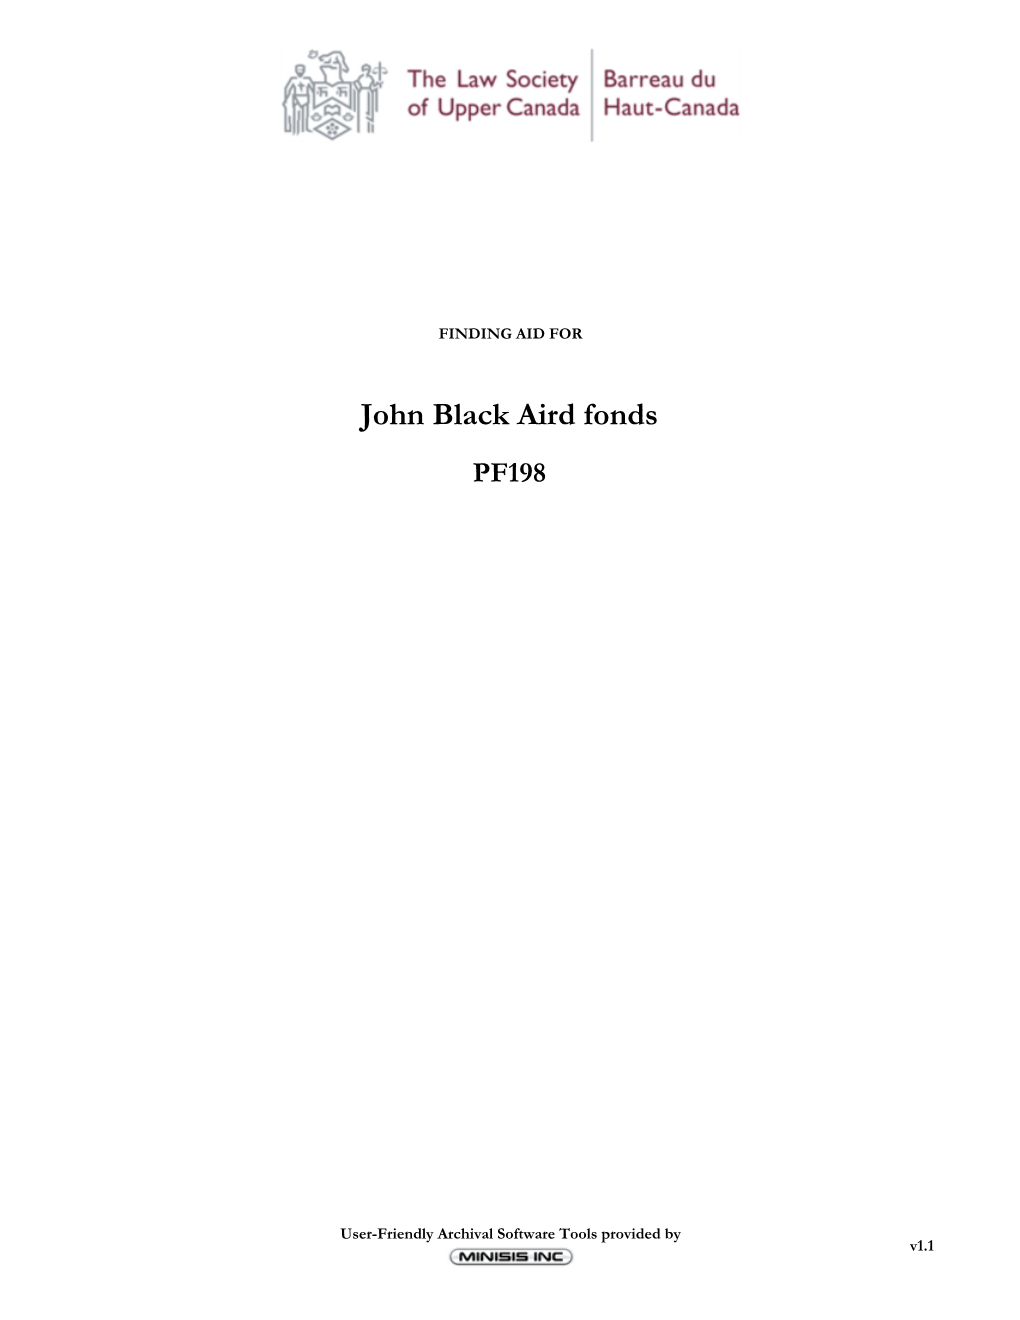 John Black Aird Fonds PF198